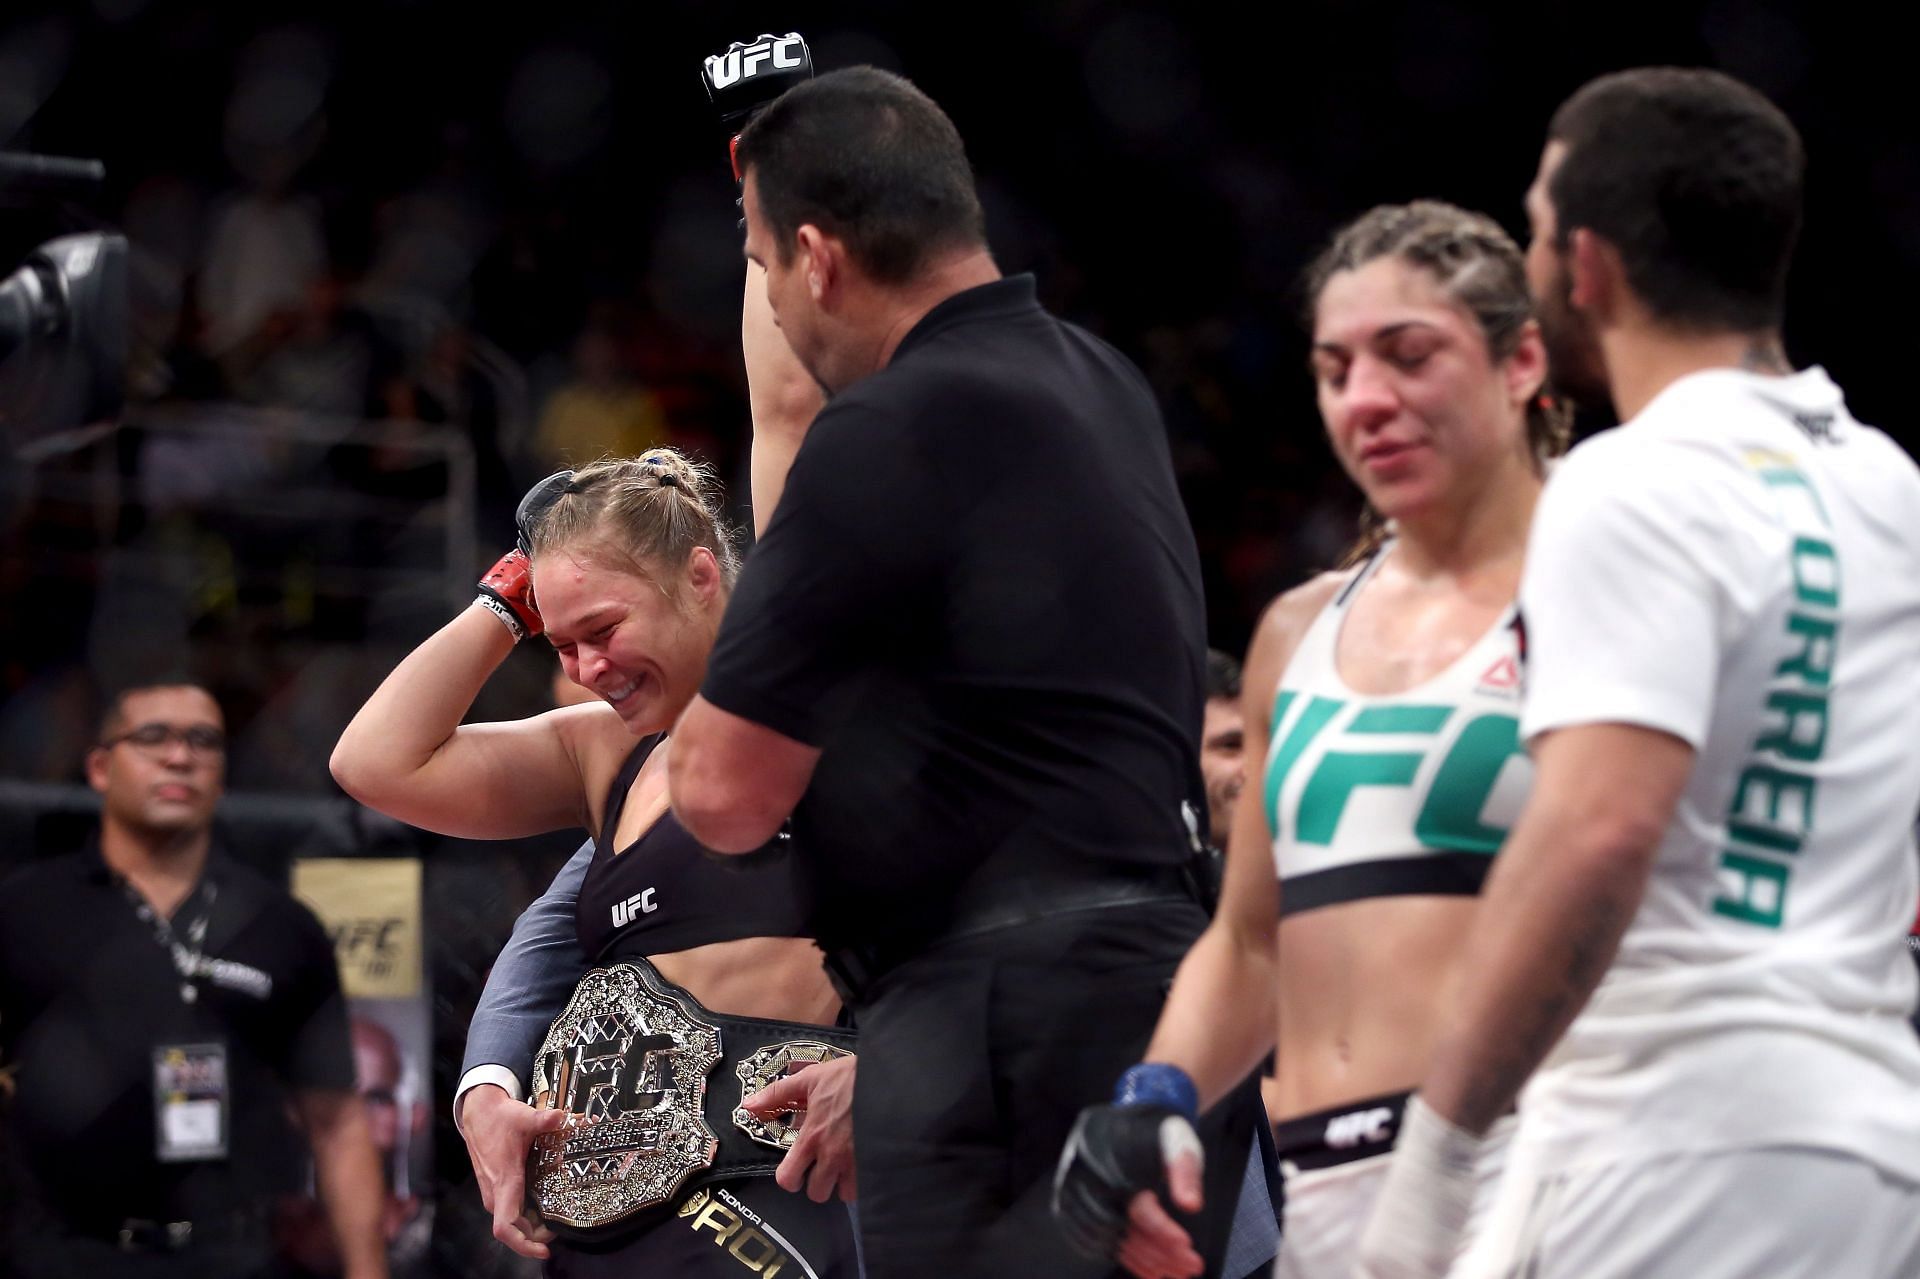 UFC 190: Rousey v Correia championship fight